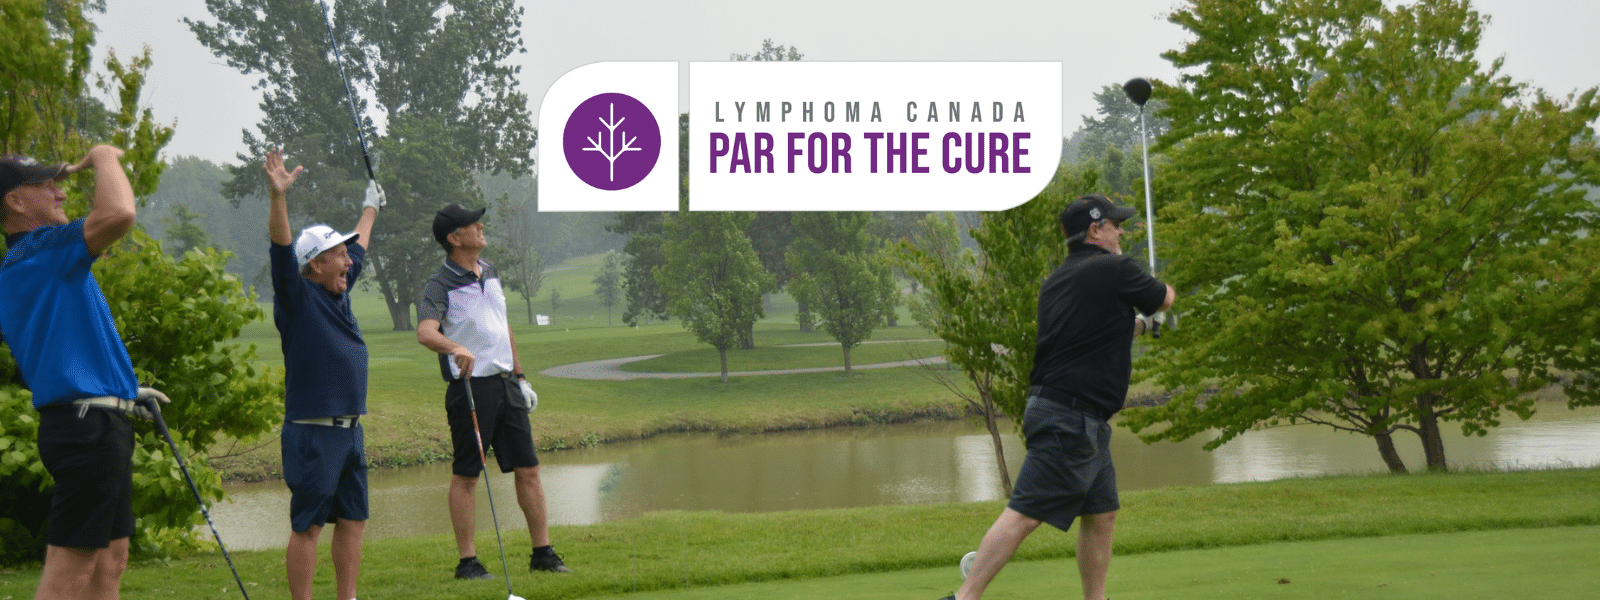 Par for the Cure Annual Golf Tournament